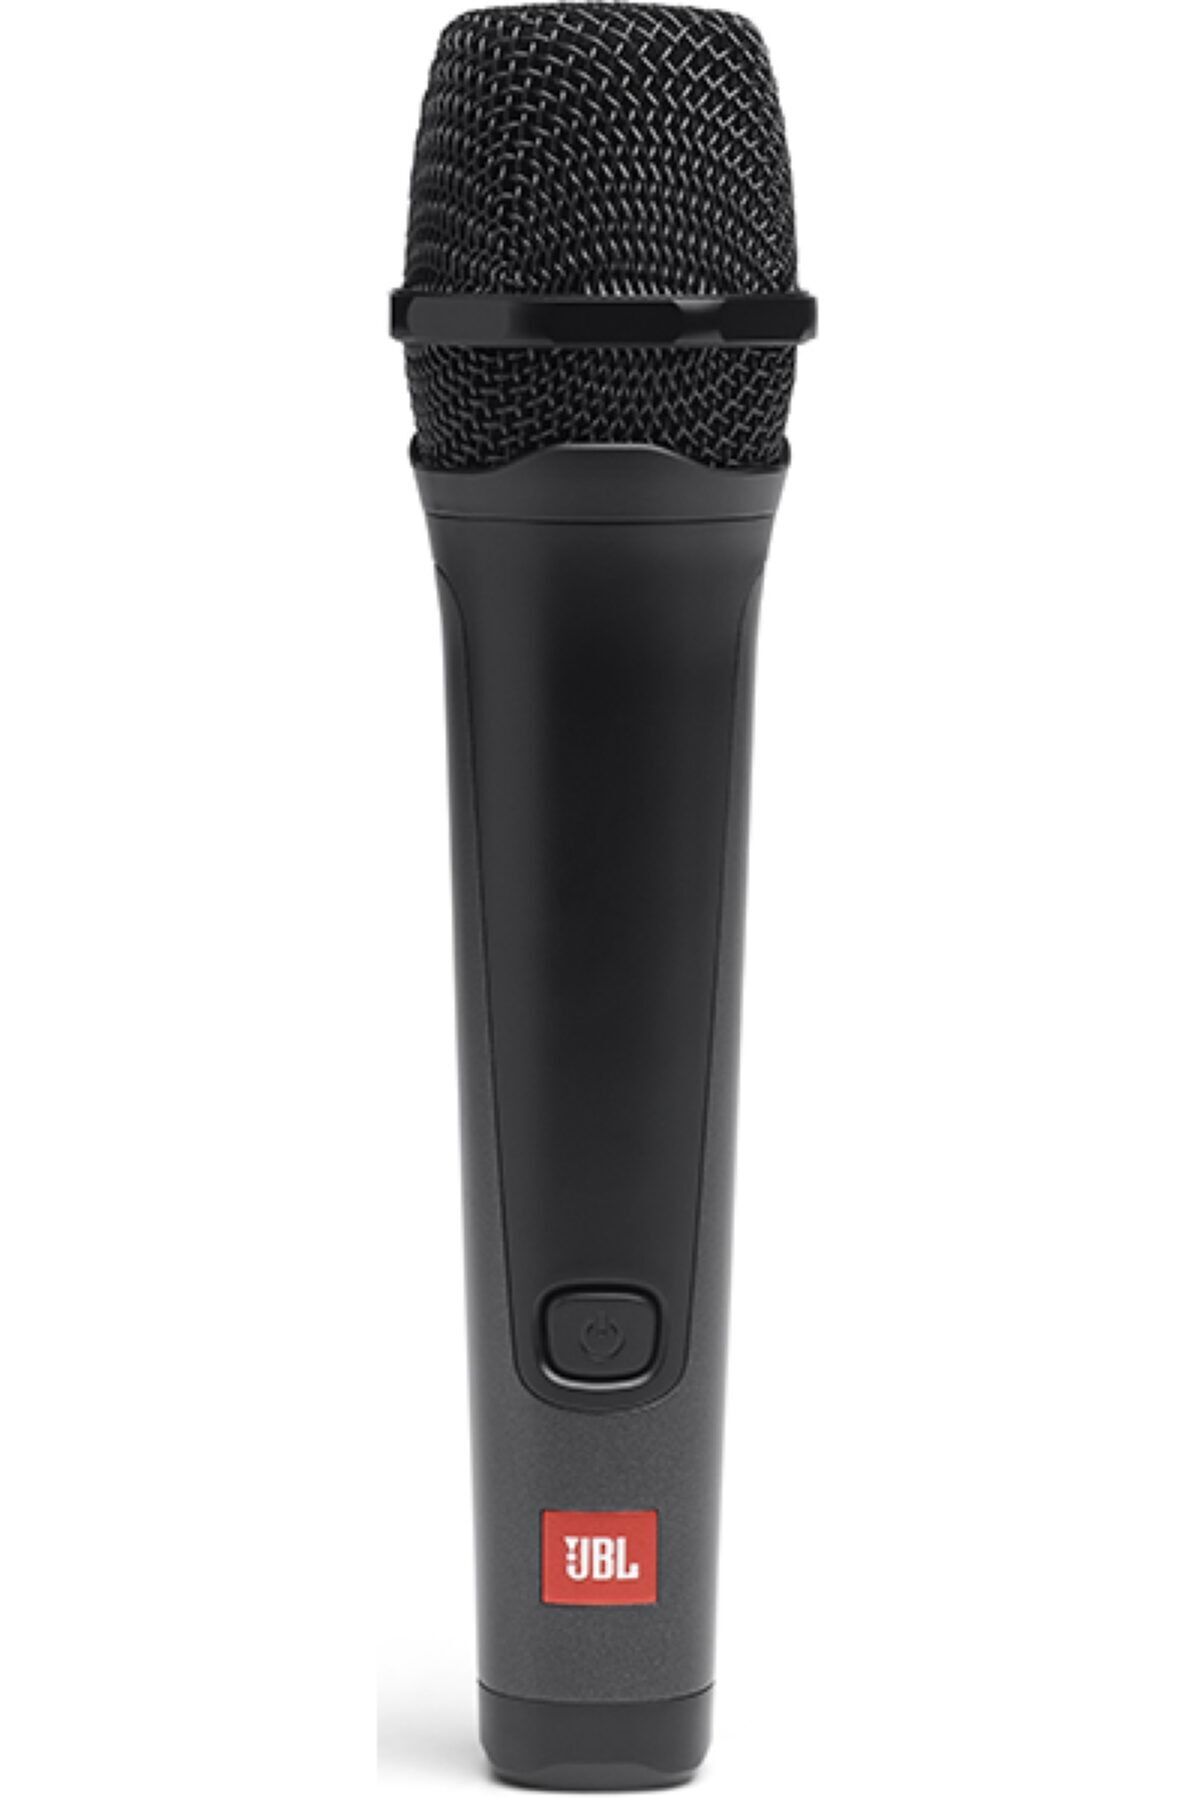 JBL Partybox Kablolu Karaoke Mikrofon Siyah-jb.pbm100blk